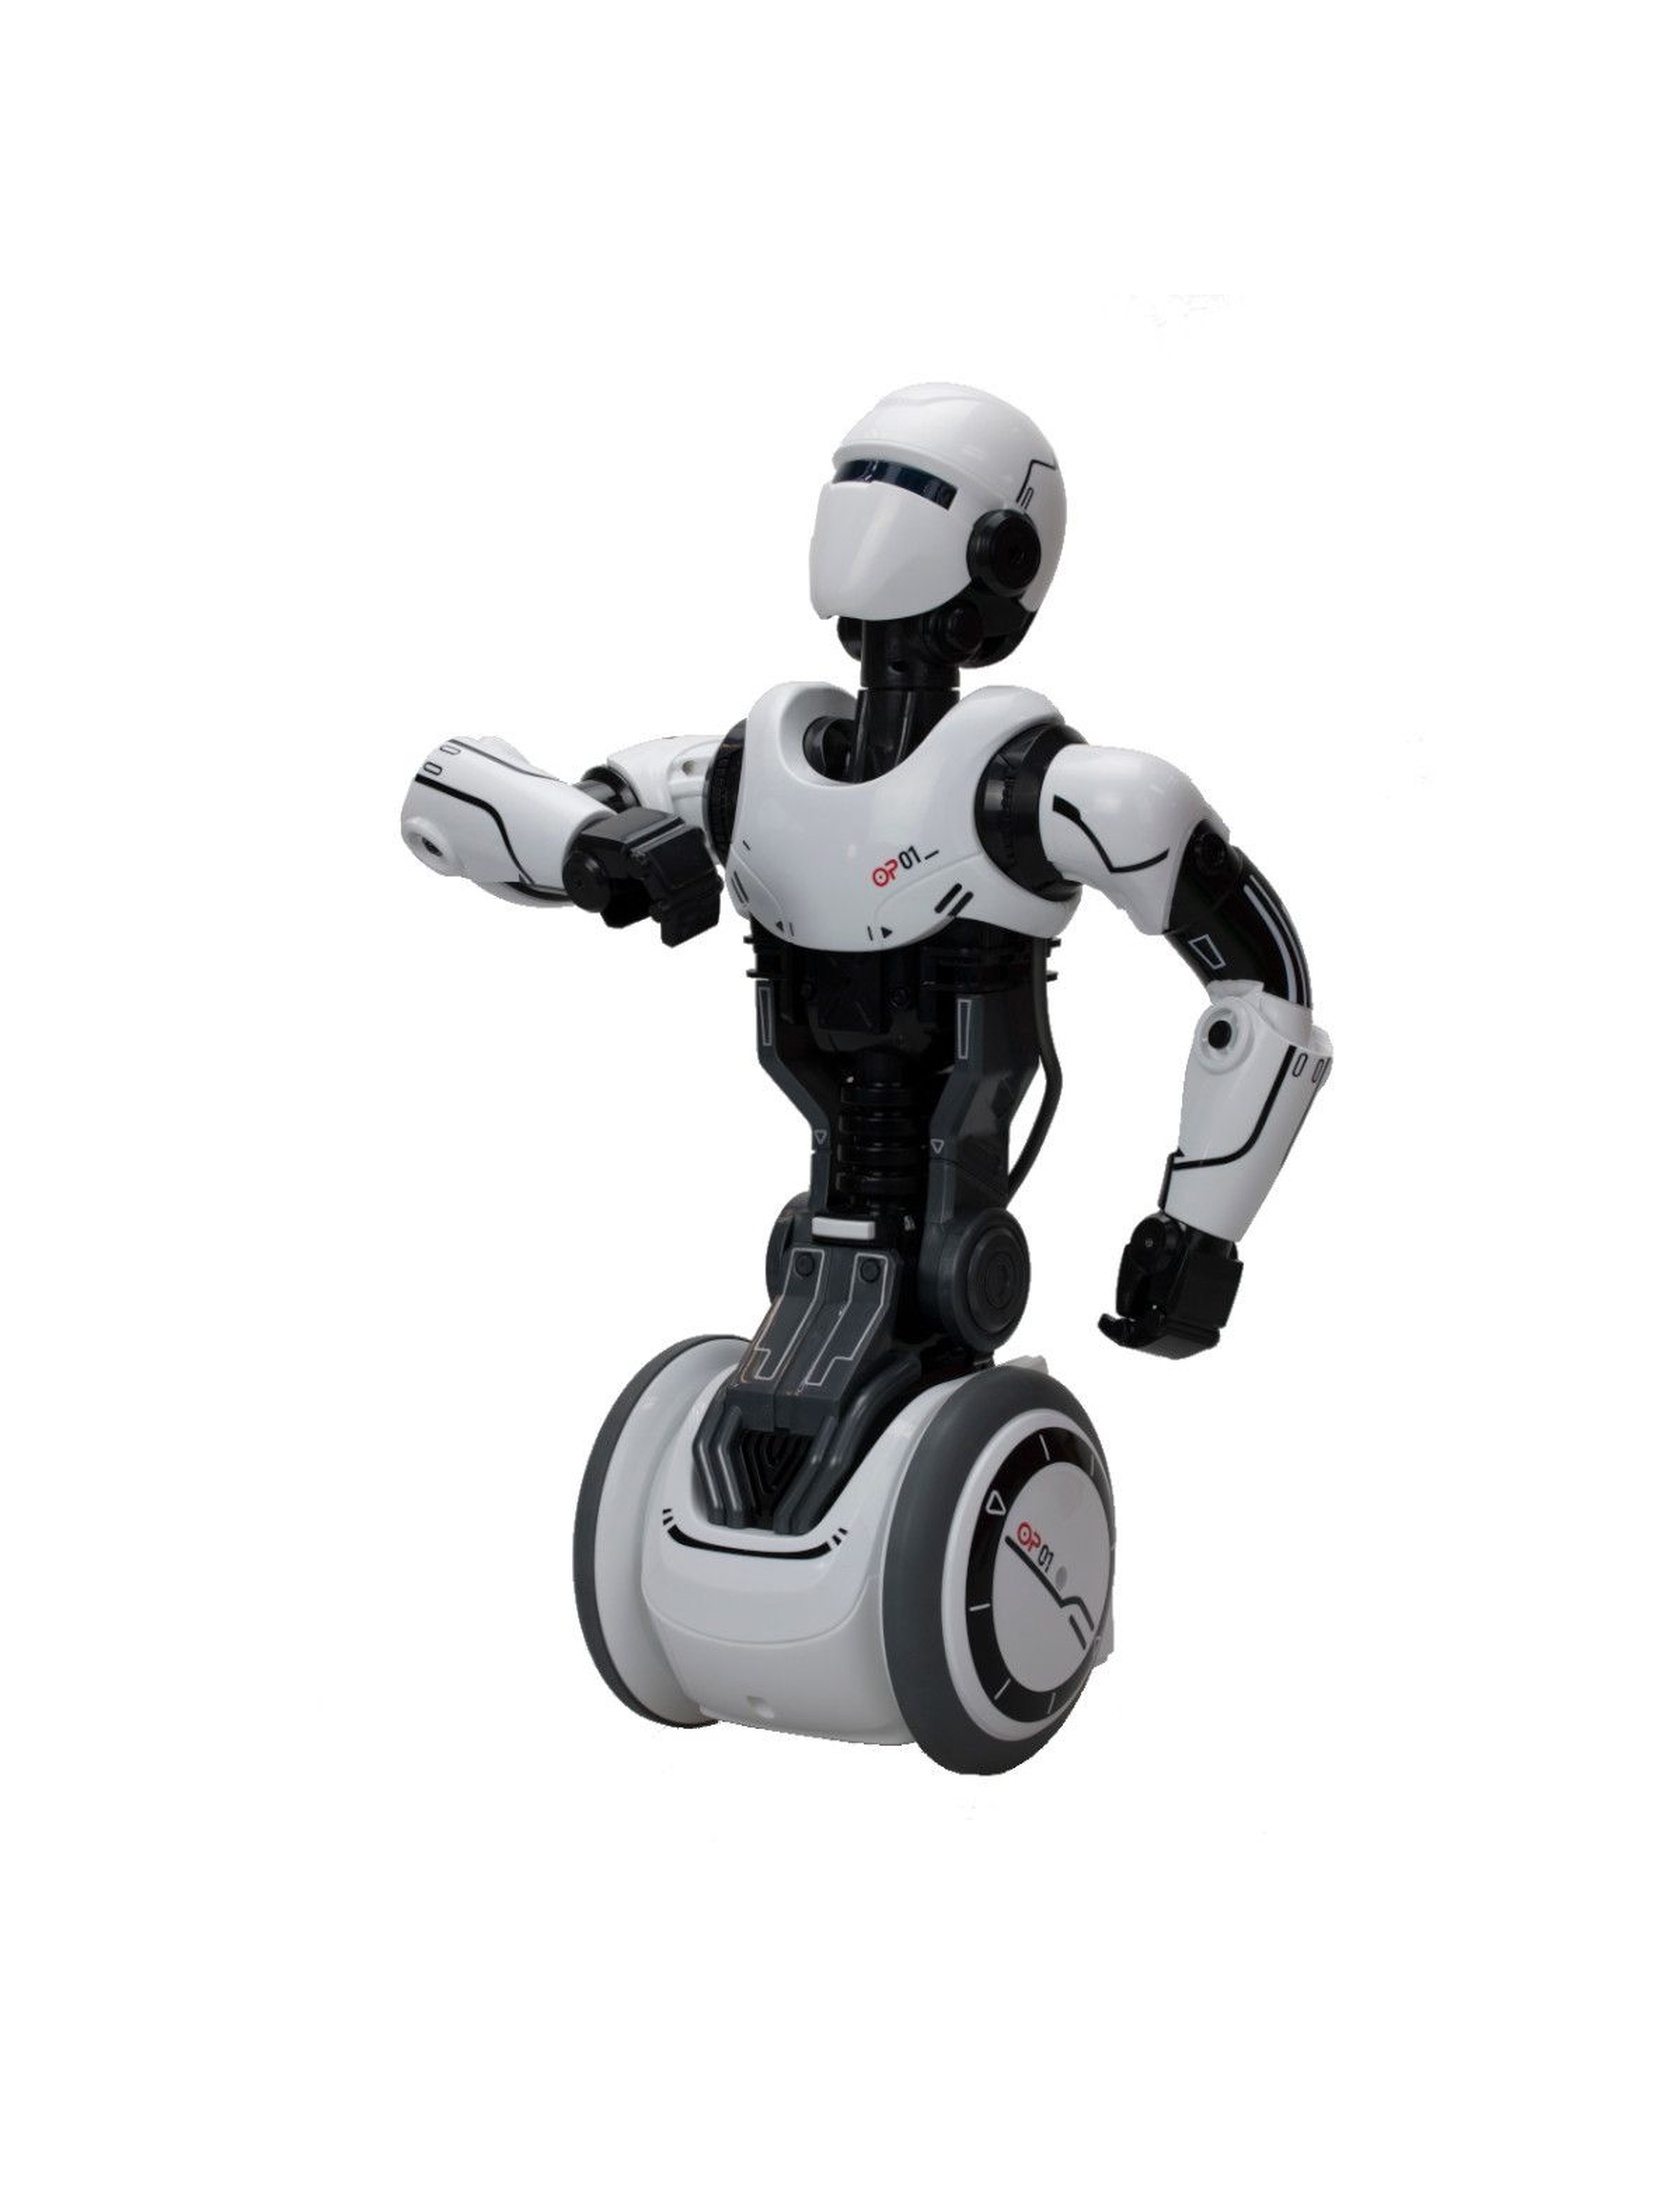 Robot O.P. one- zabawka zdalnie sterowana